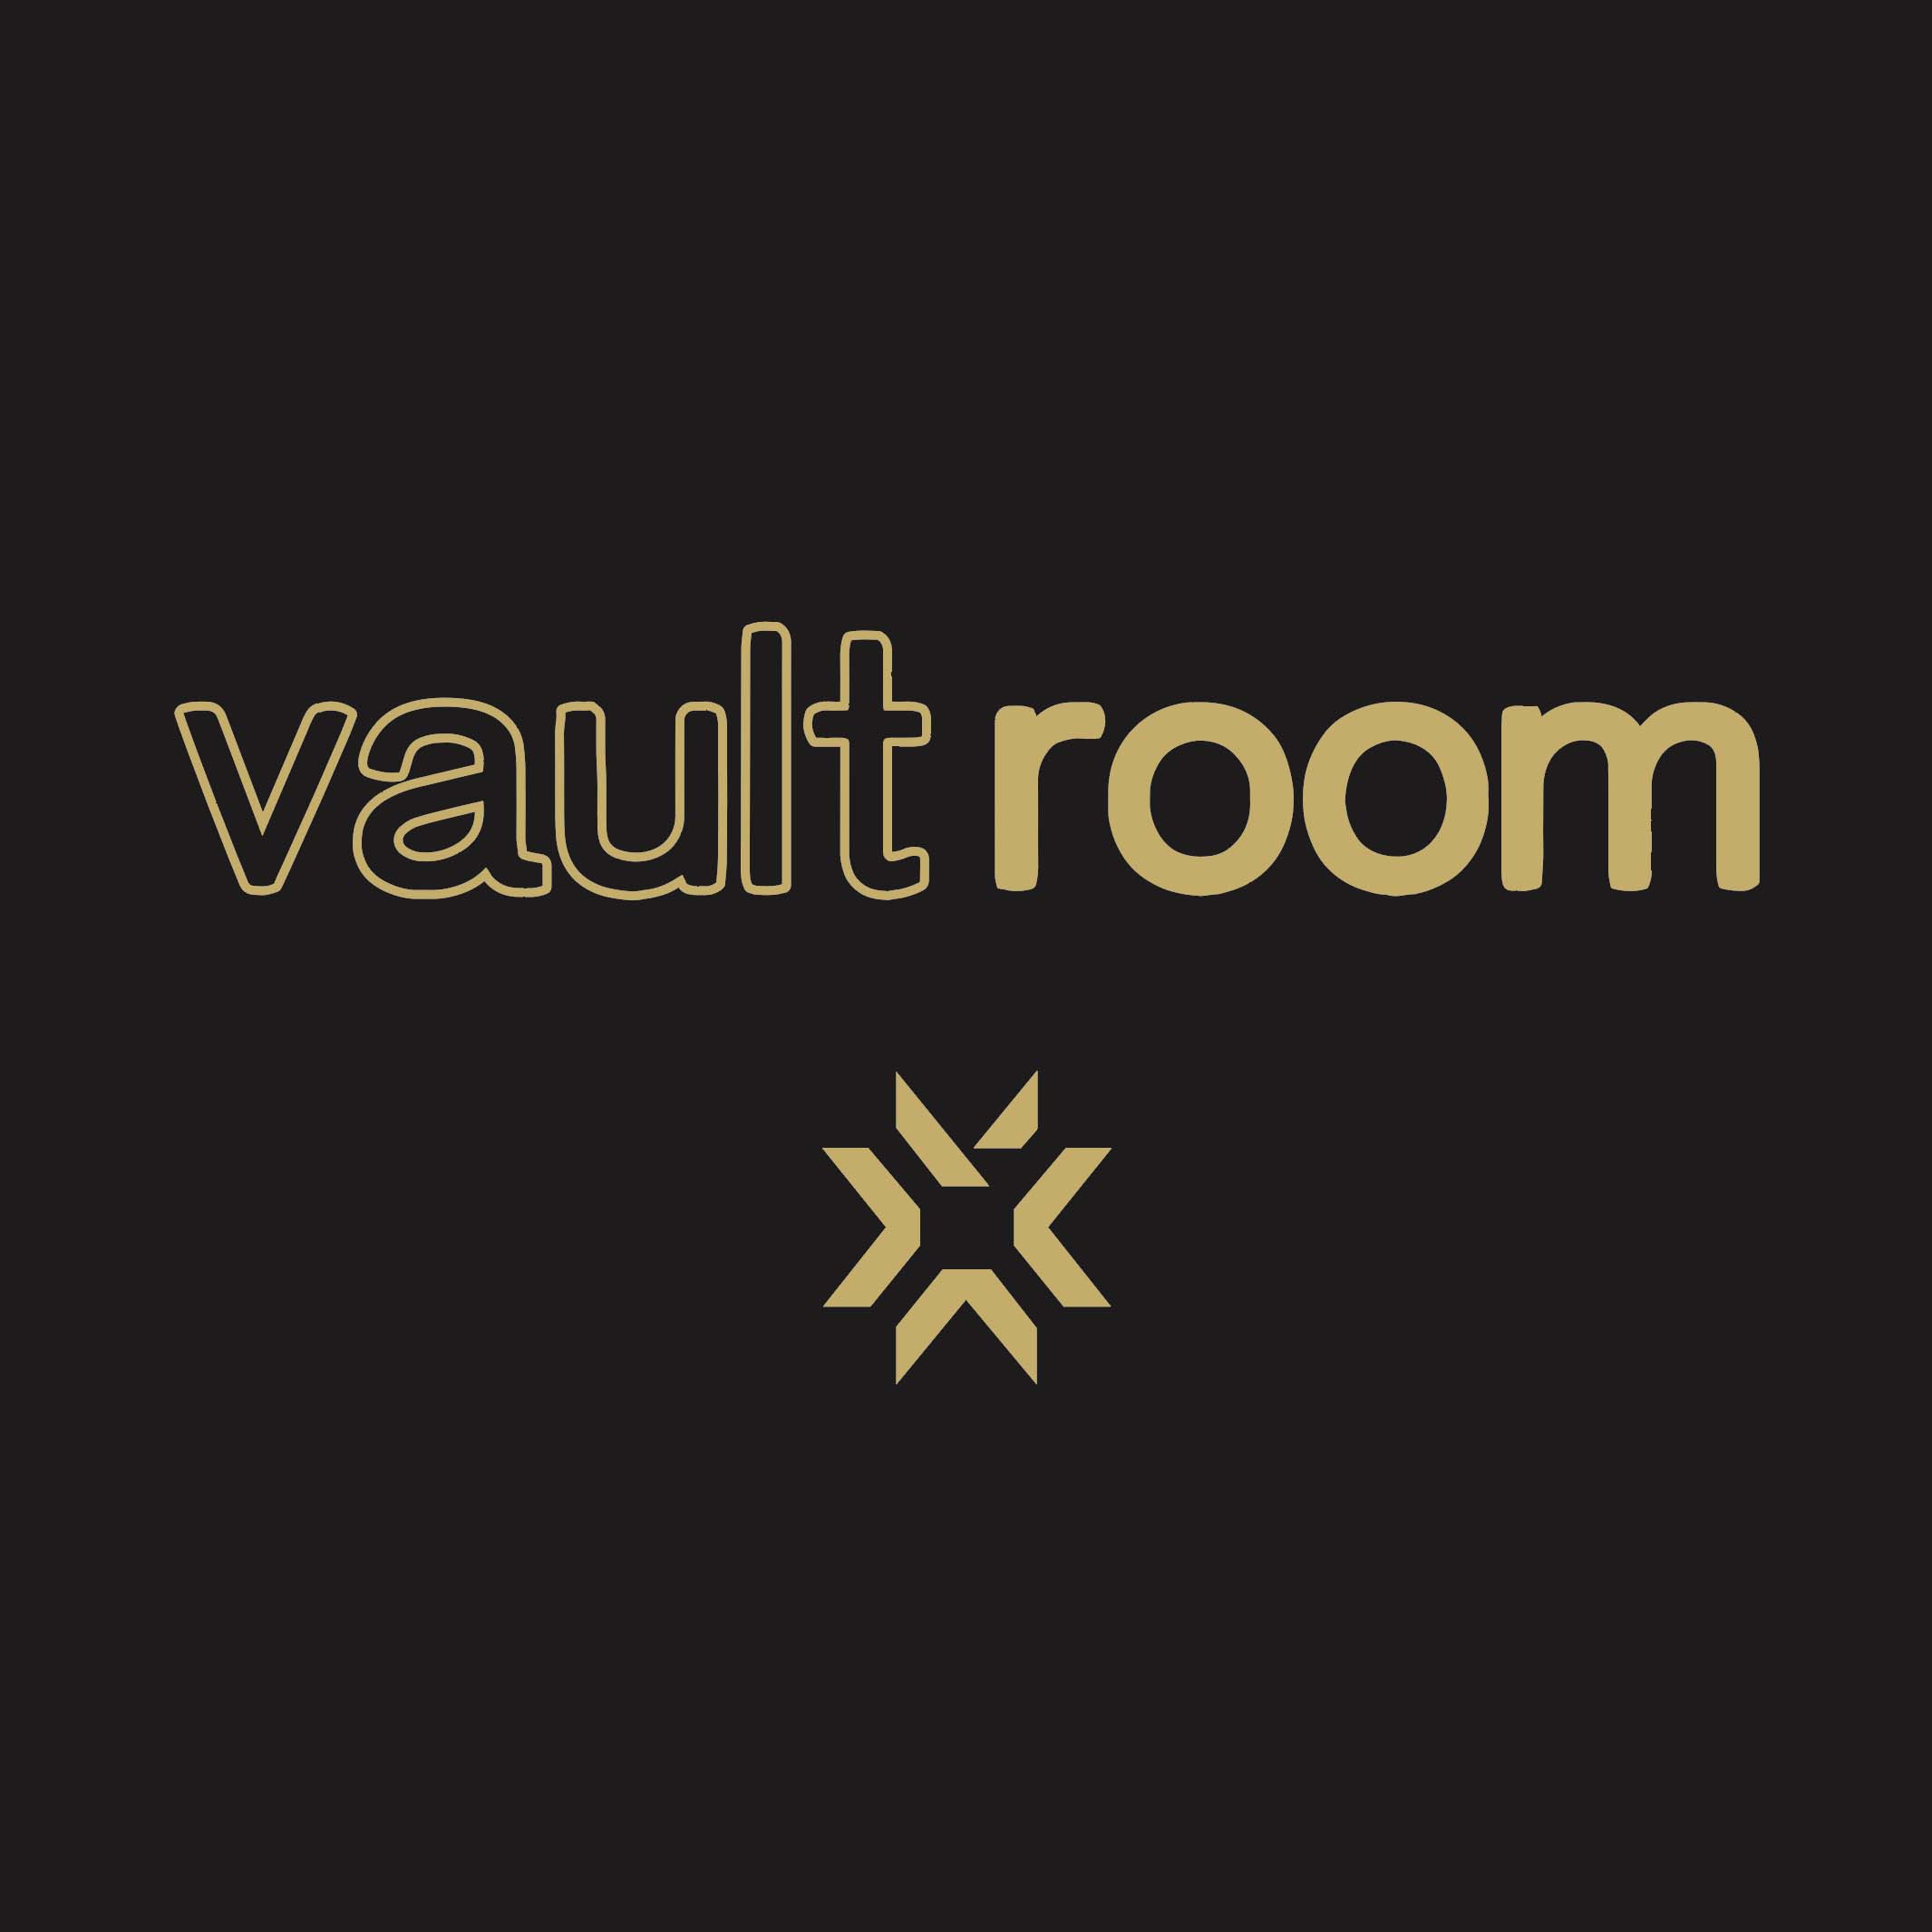 vaultroom × VALORANT Champions – VAULTROOM